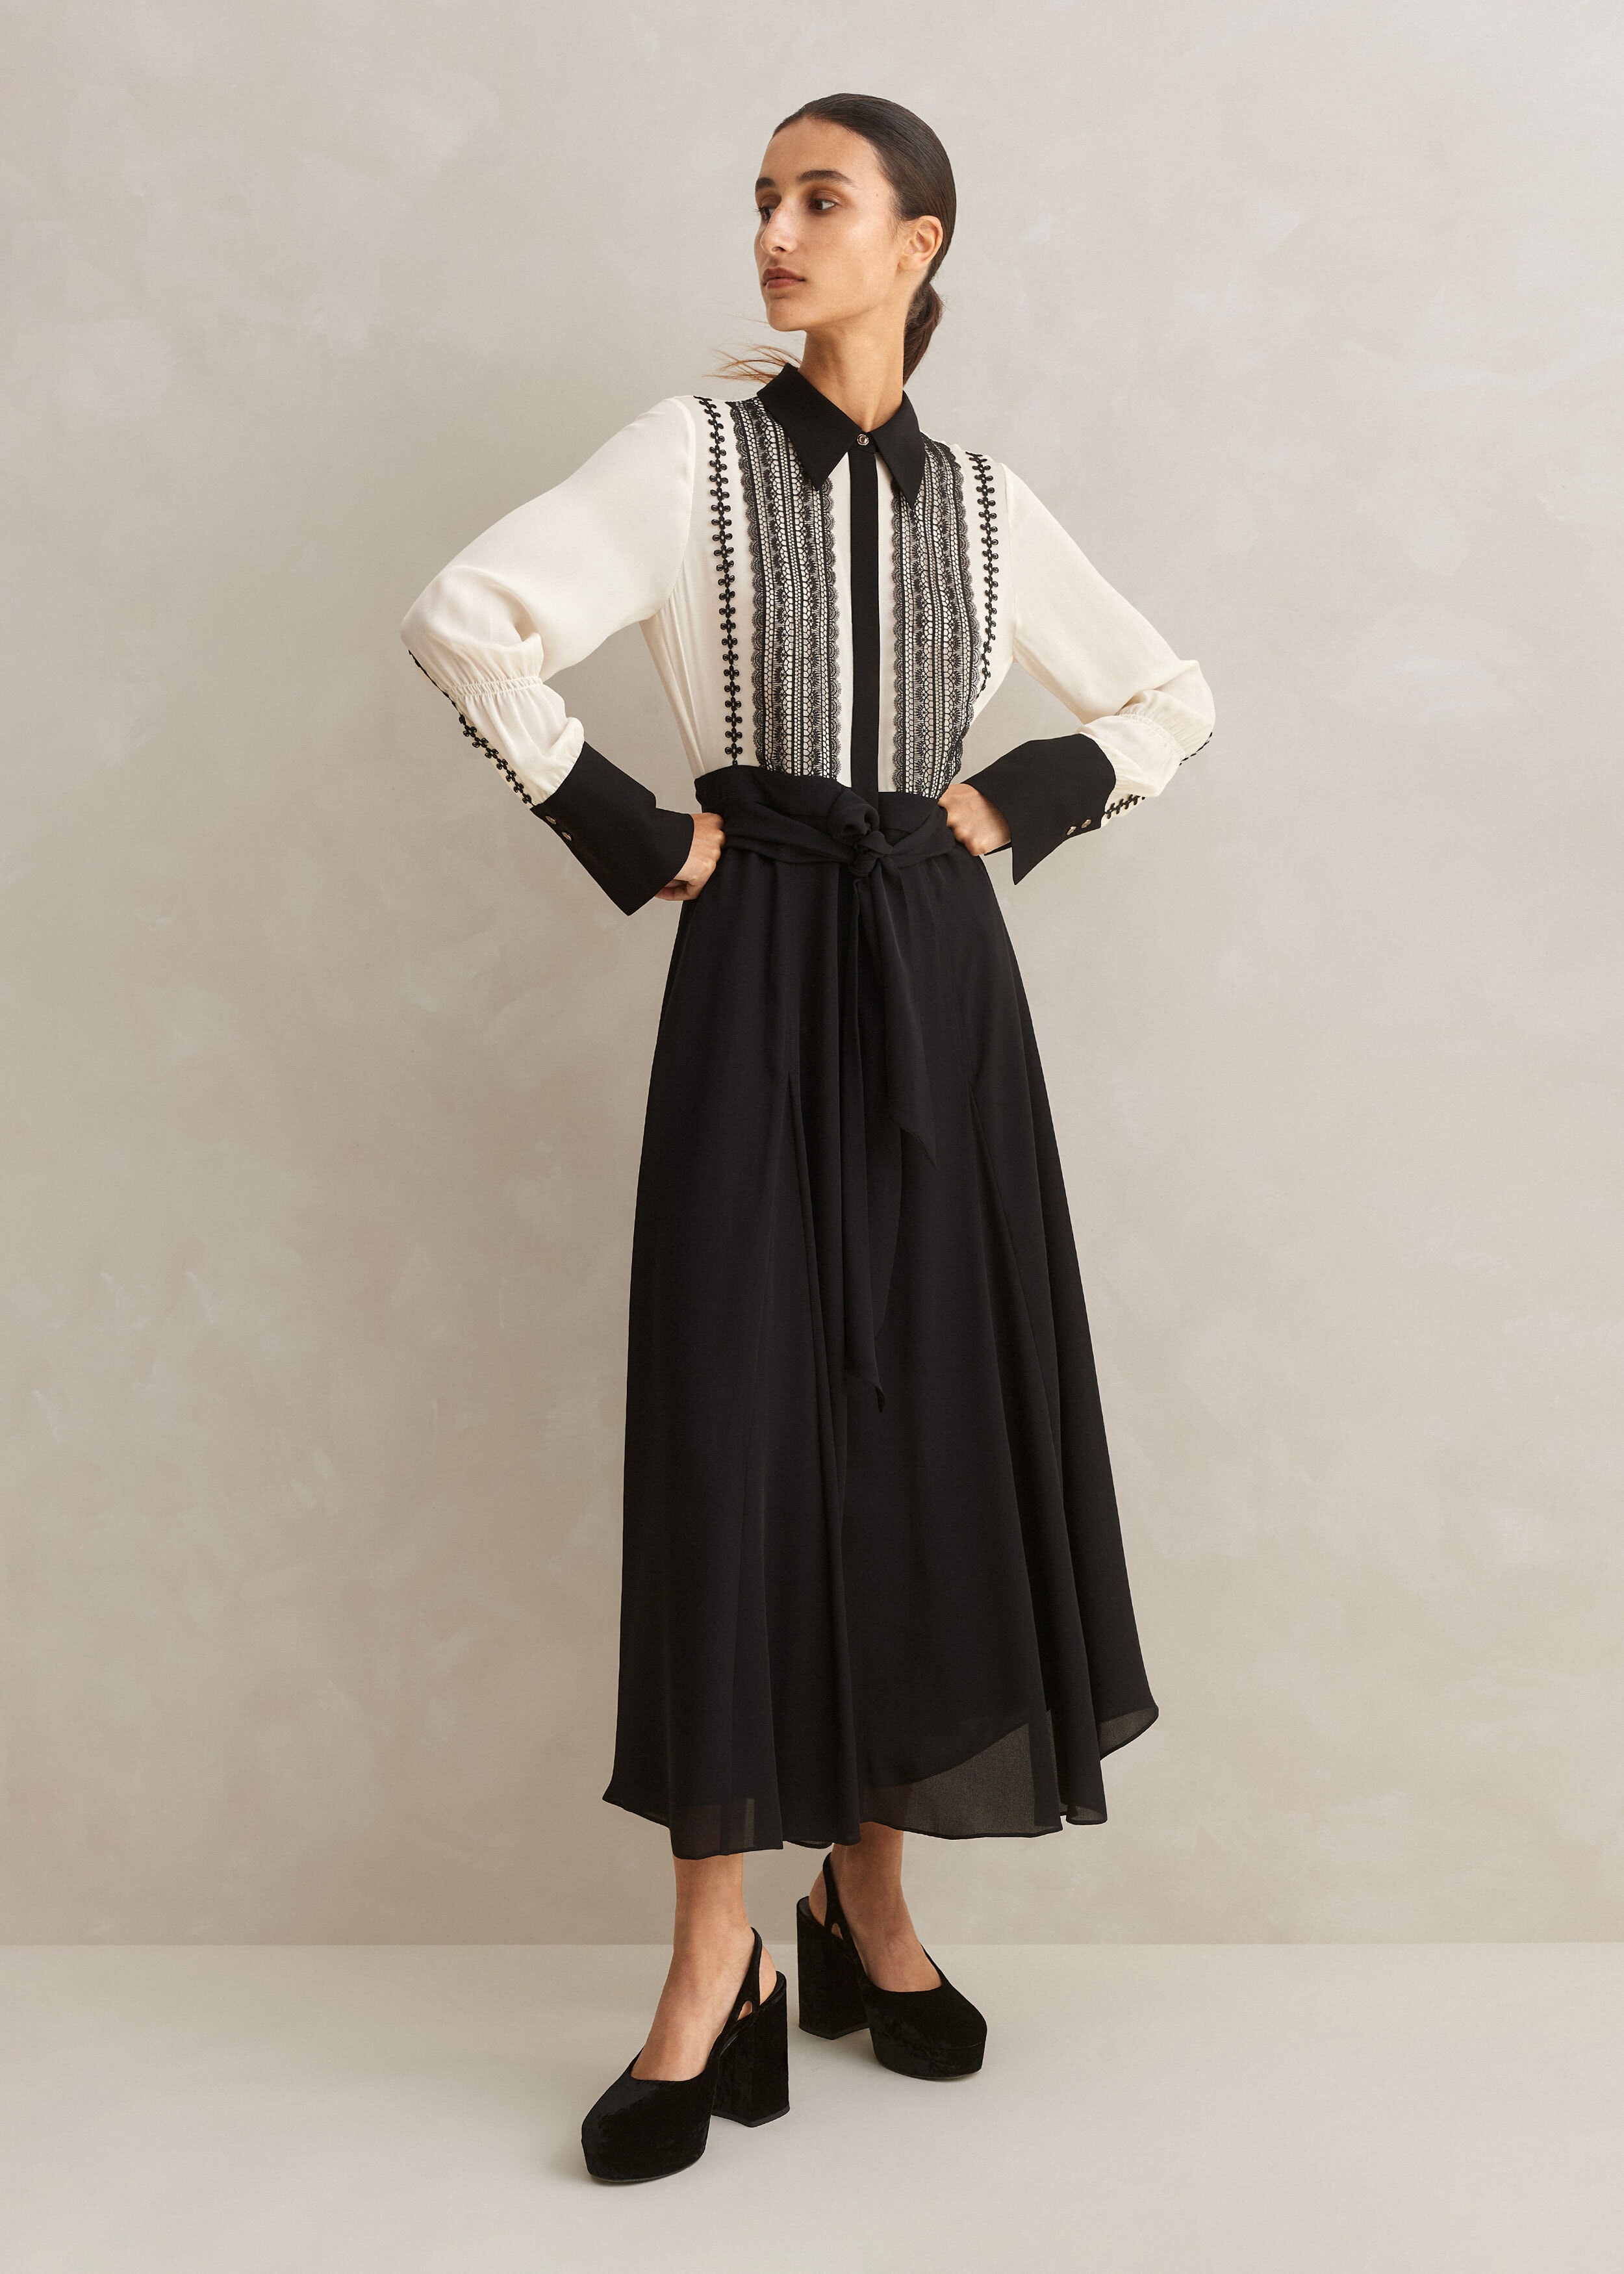 Georgette Dress + Silk Shirt Maxi Cream/Black Lace Belt